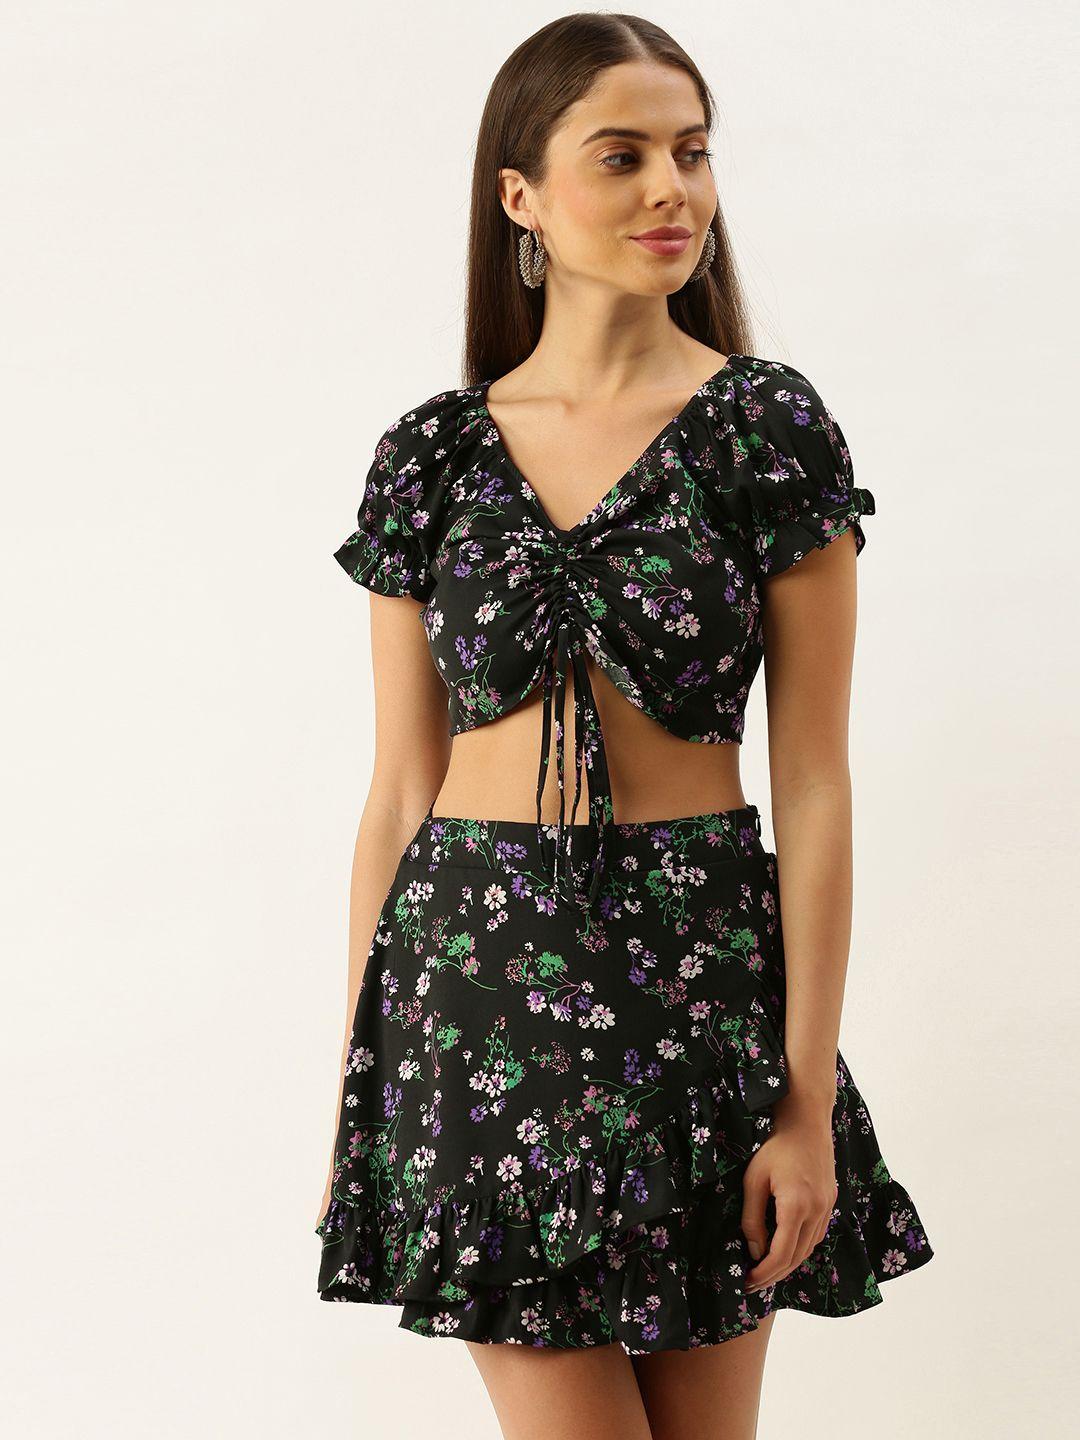 berrylush women black & purple floral printed co-ordinate sets dress